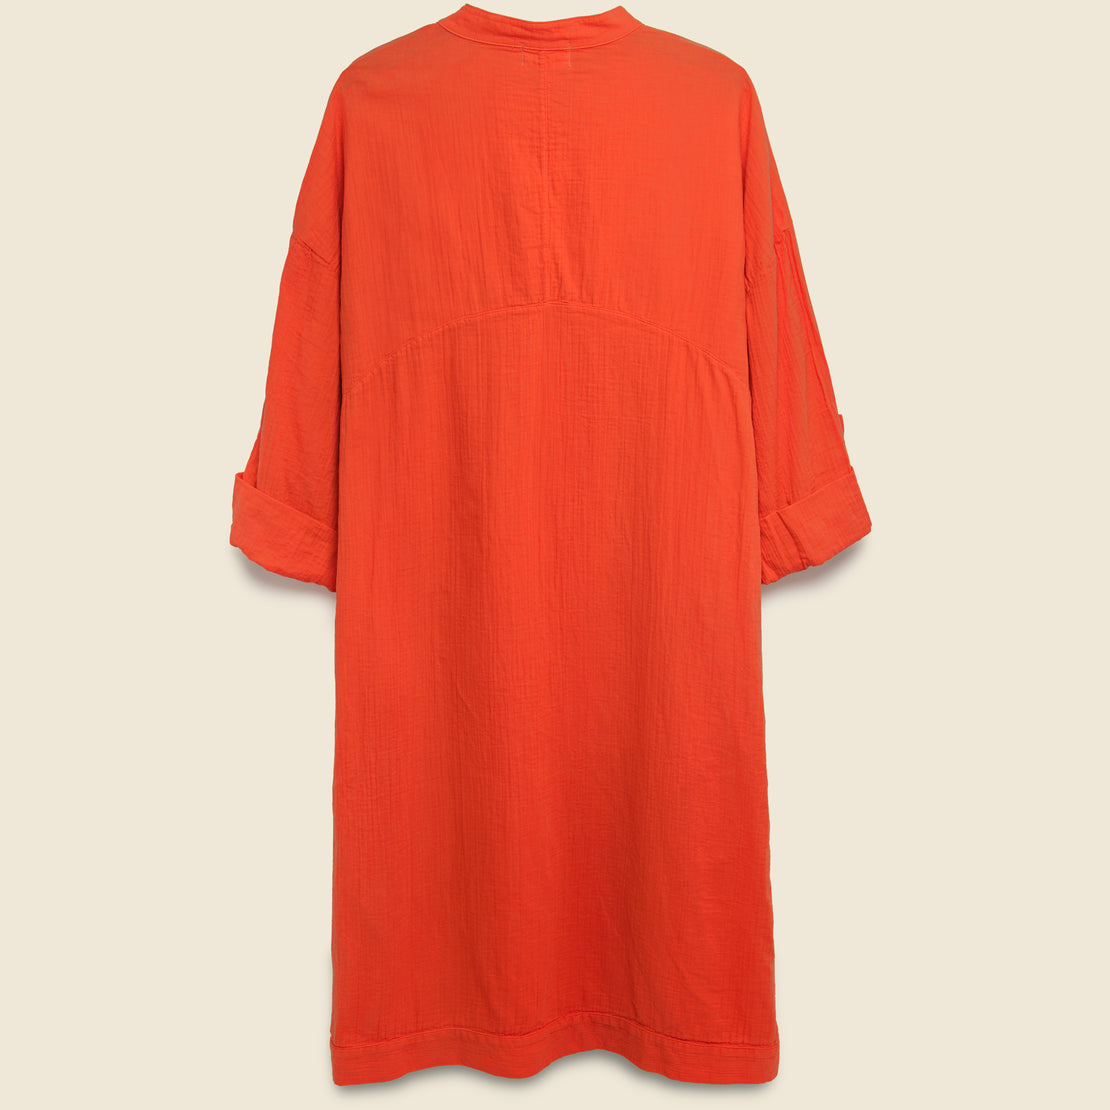 Beni Dress - Neon Peach - Atelier Delphine - STAG Provisions - W - Onepiece - Dress